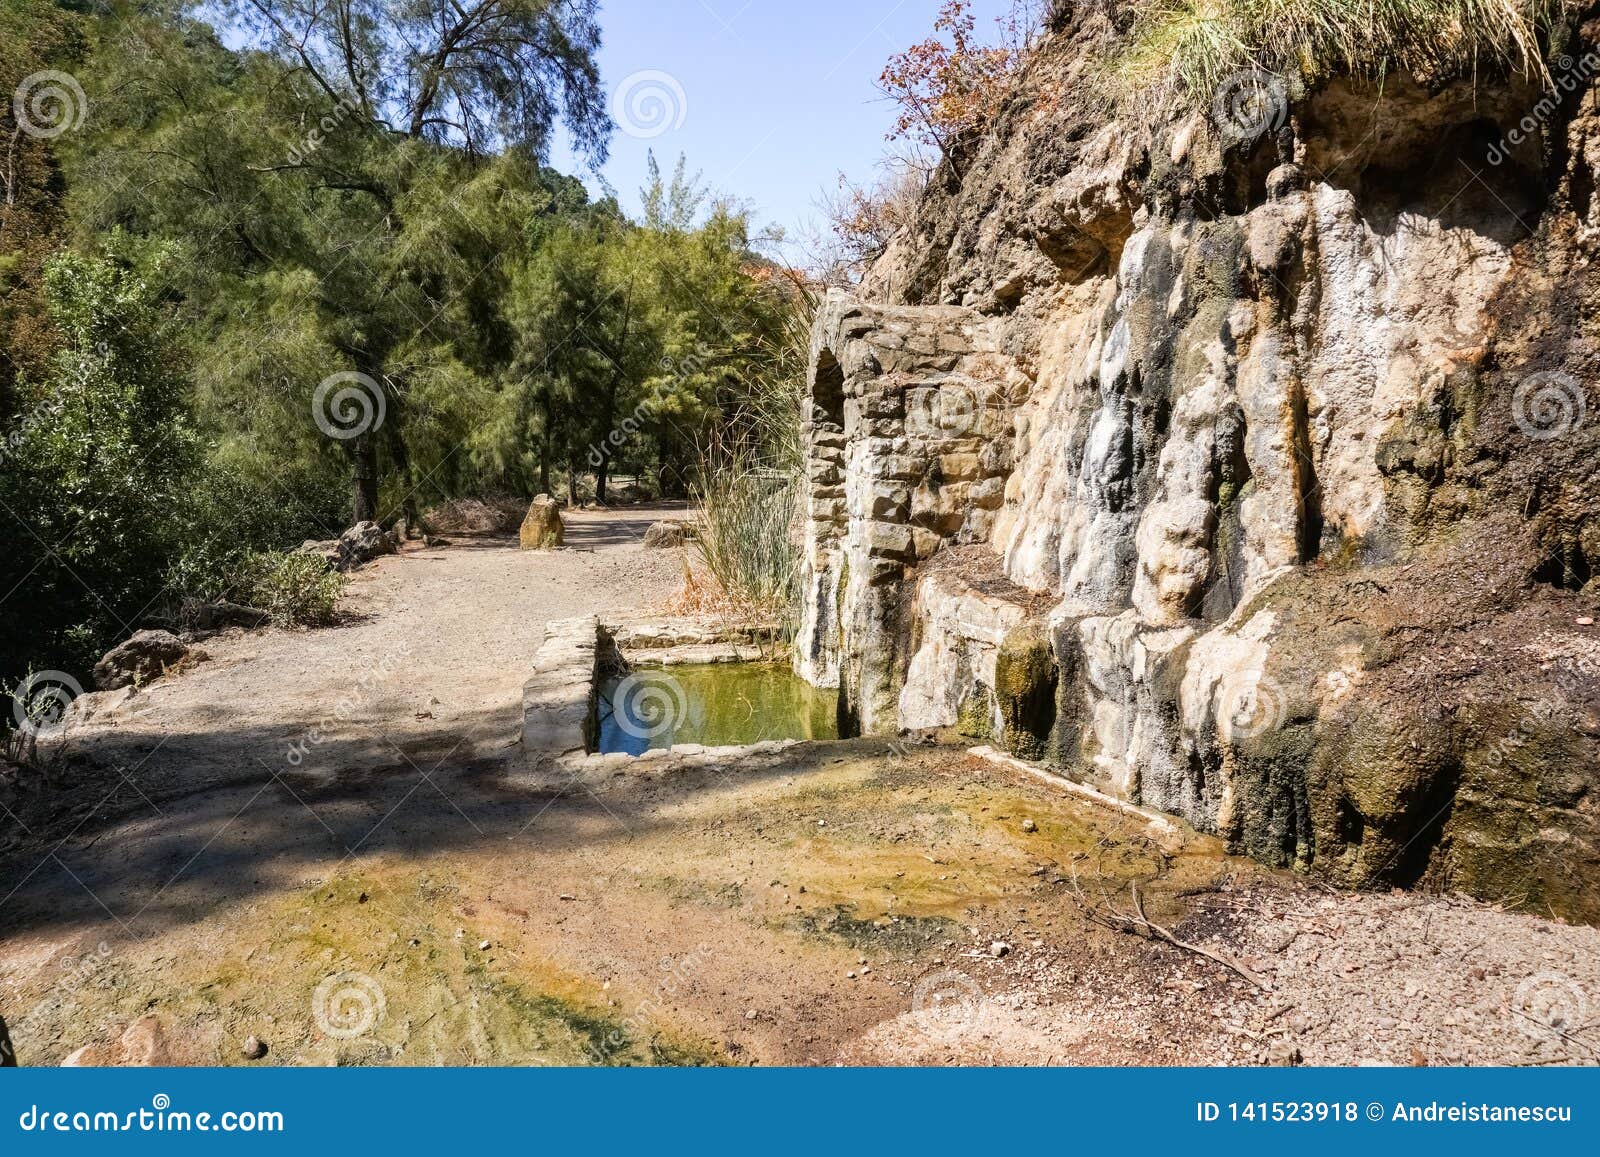 mineral spring, alum rock park, san jose, california